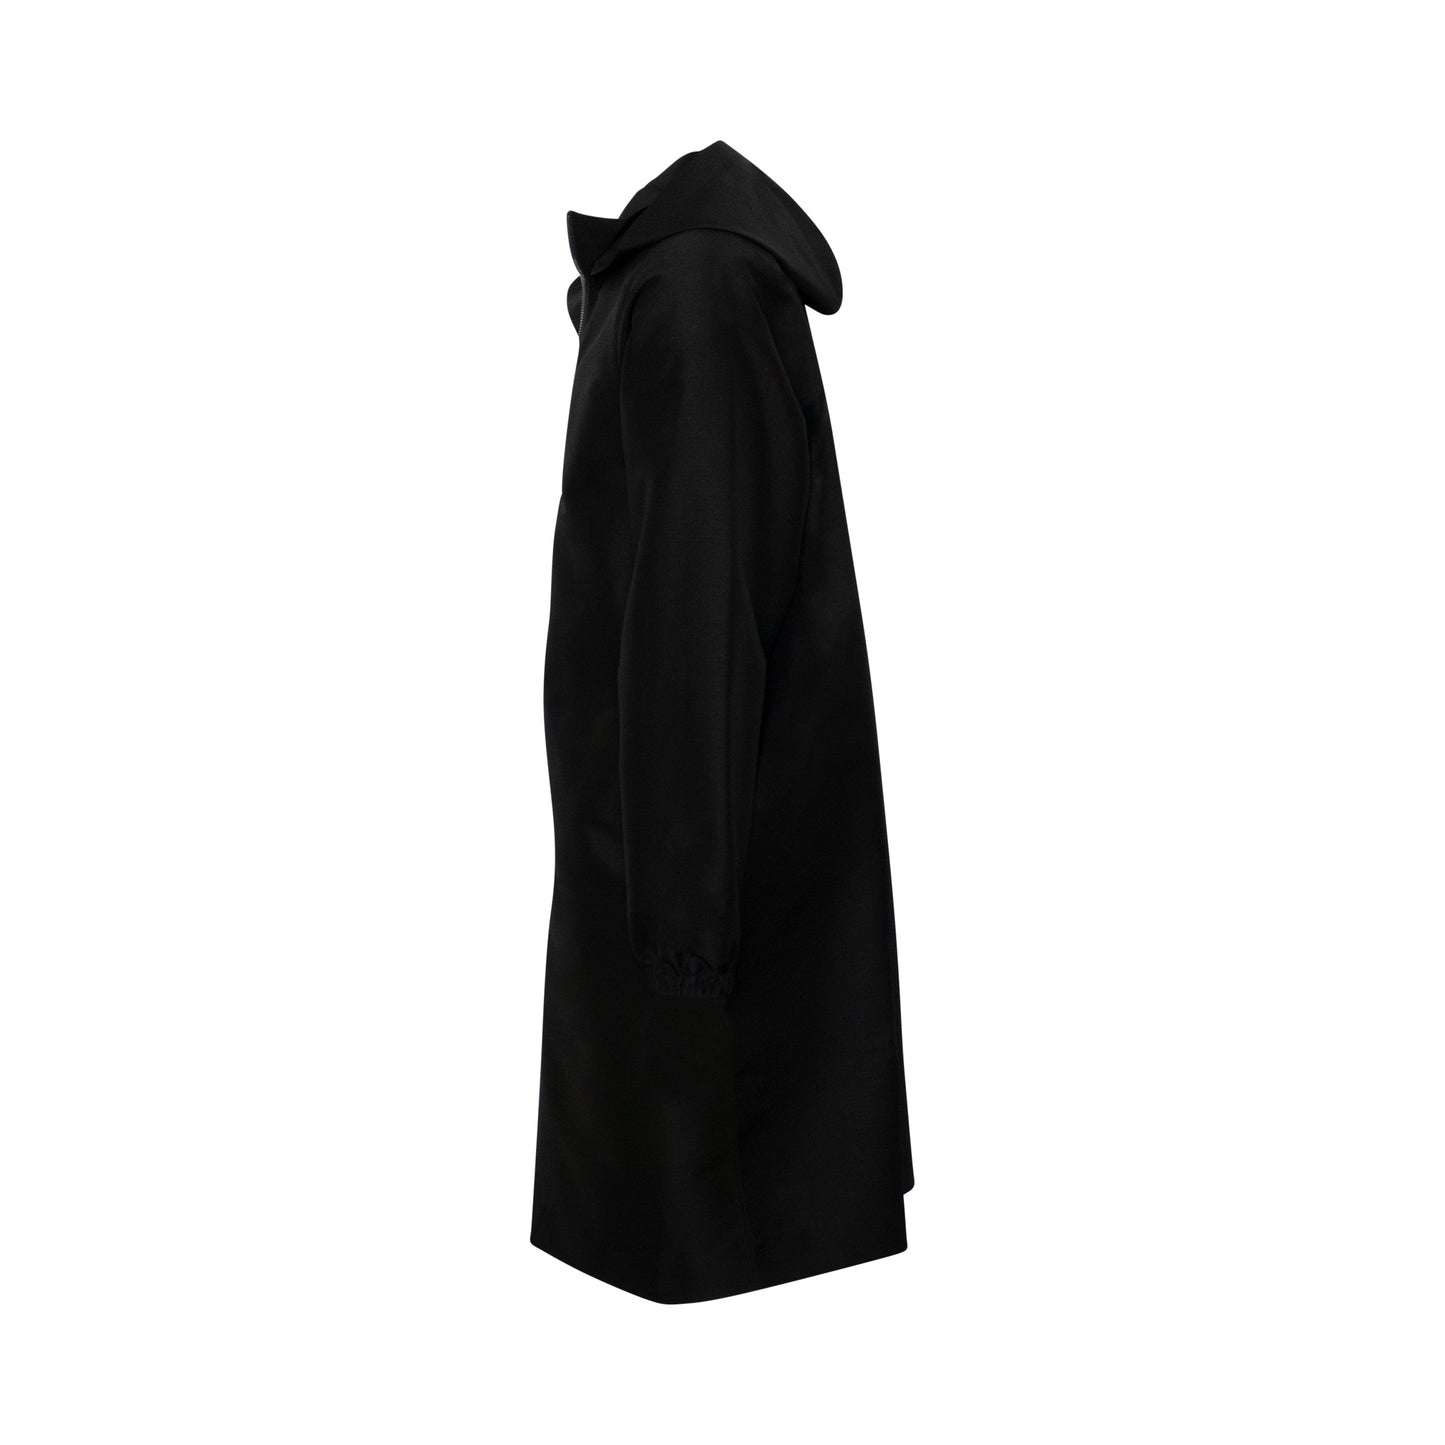 Windpea Coat in Black